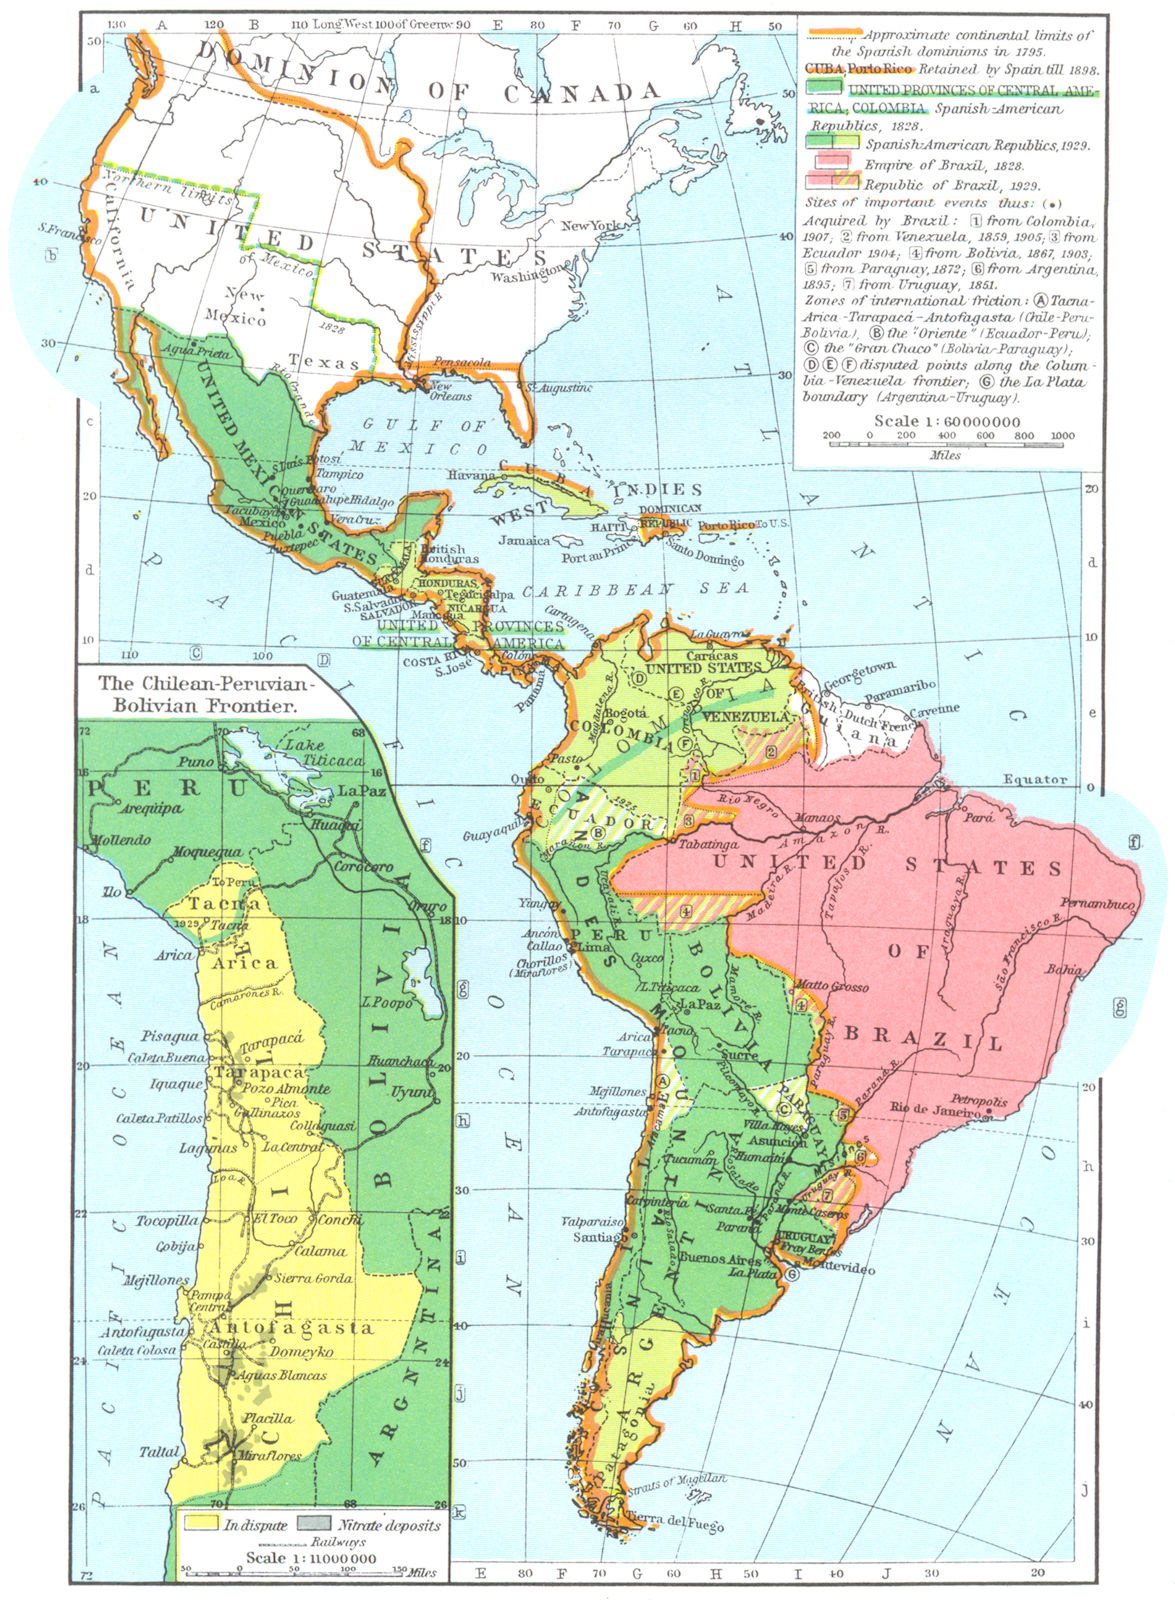 SOUTH AMERICA. Hispanic, 1828-1929; Chilean-Peruvian Bolivian Frontier 1956 map